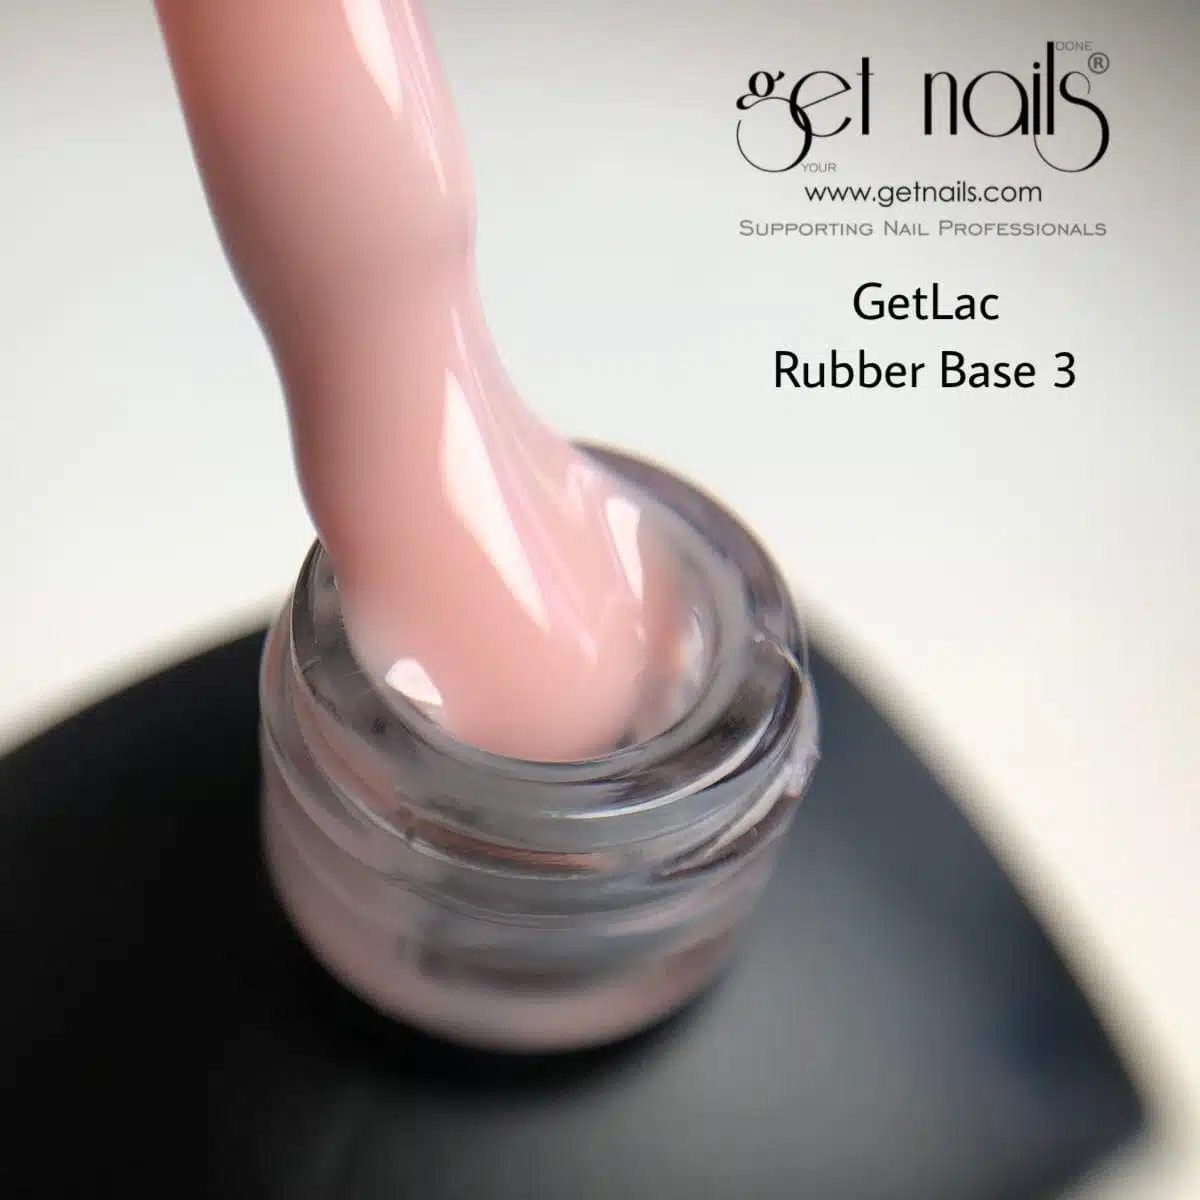 Get Nails Austria - GetLac Rubber Base 3 15г